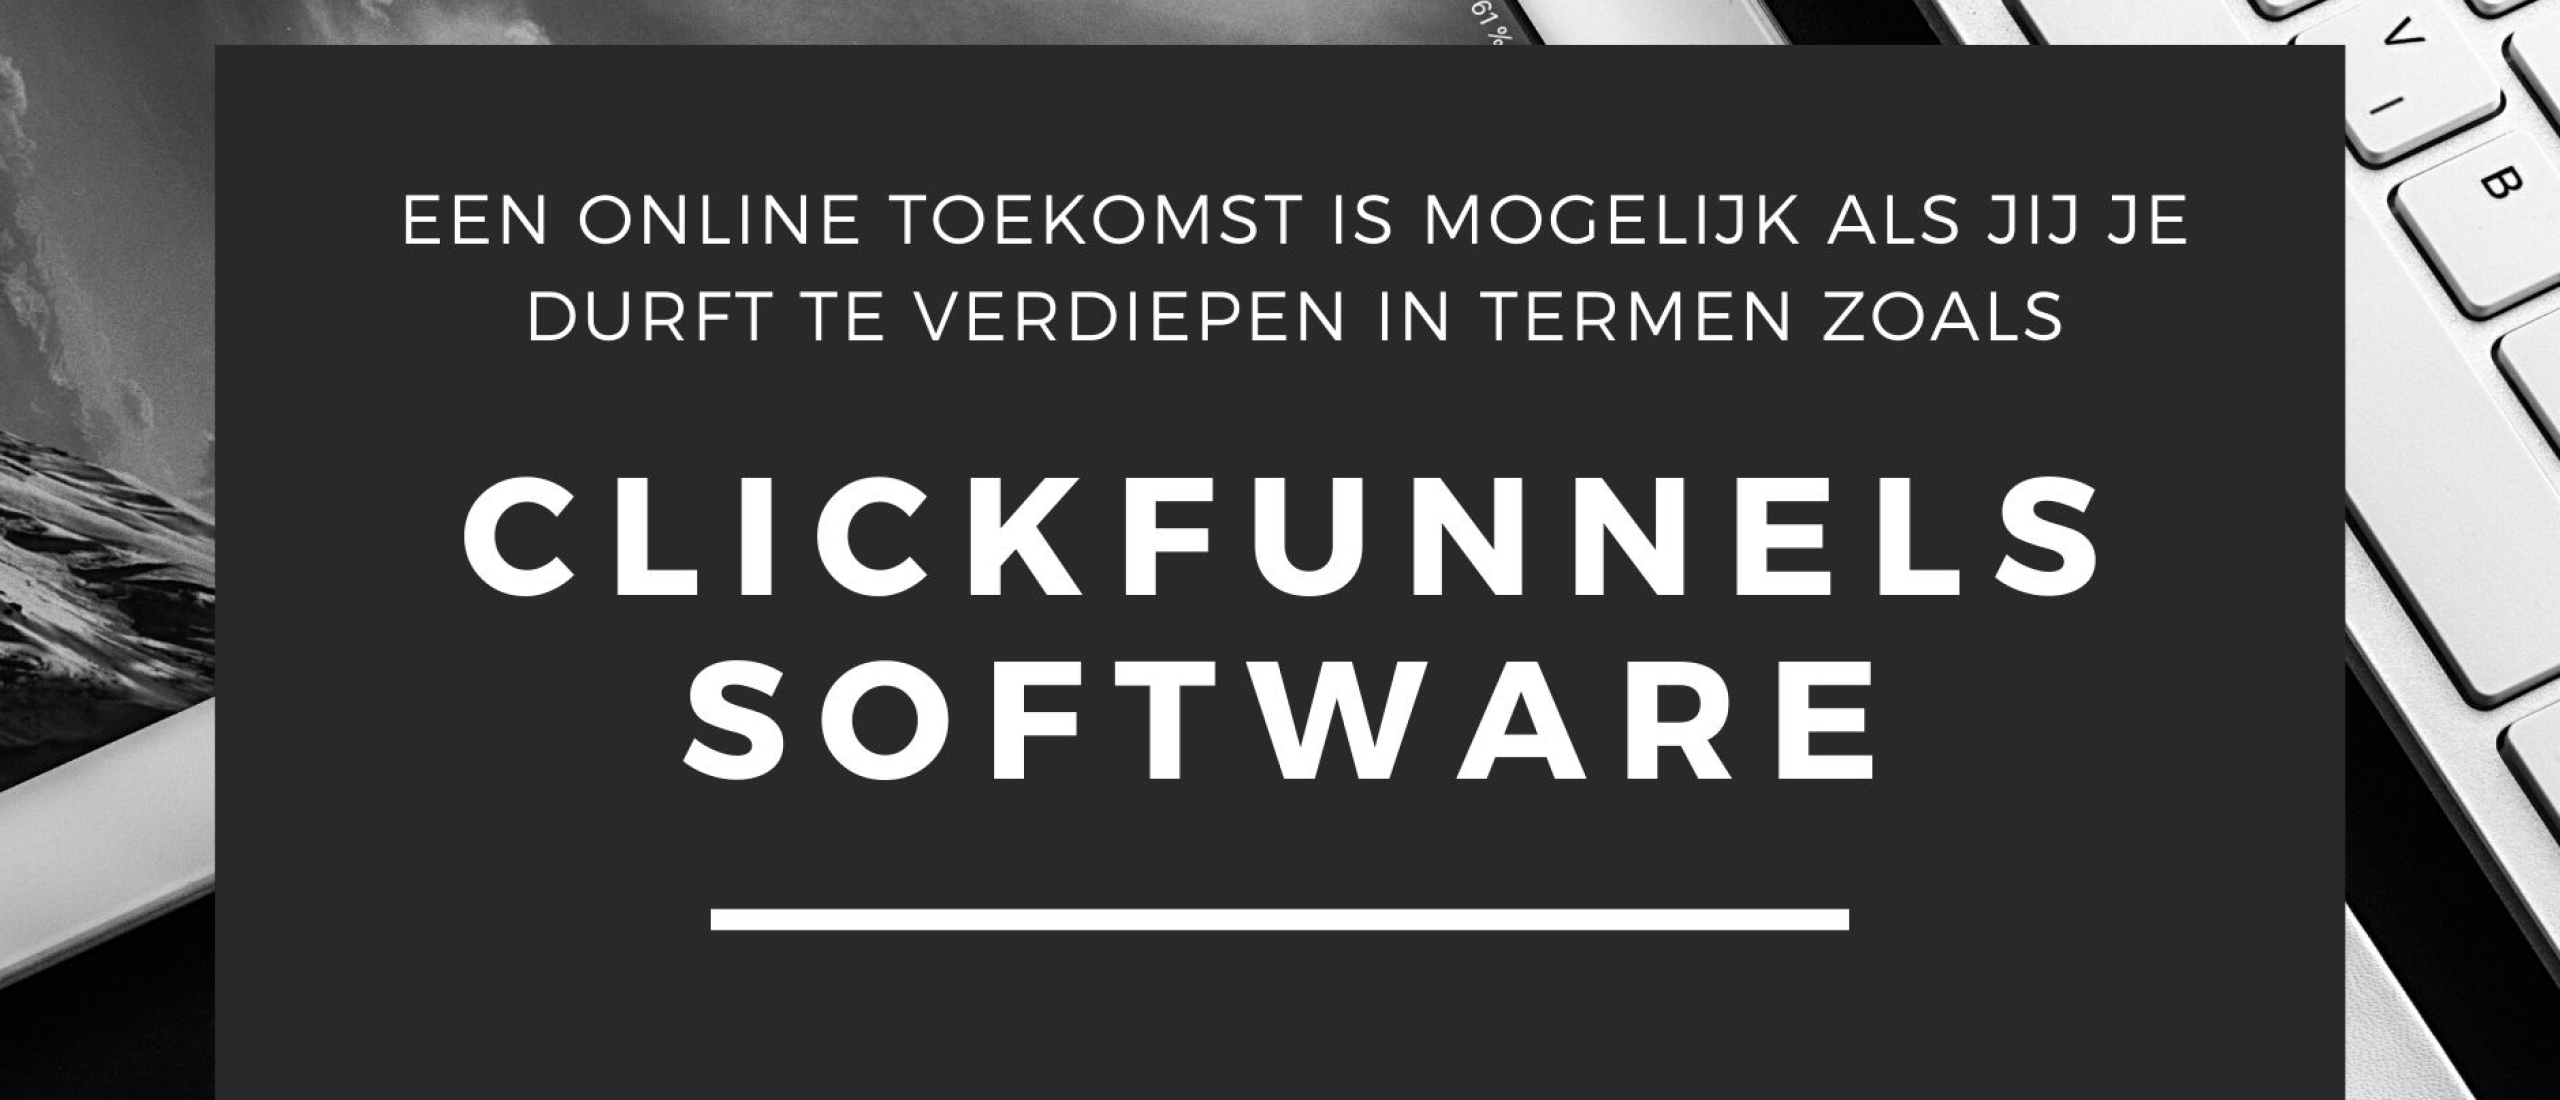 Clickfunnels software review